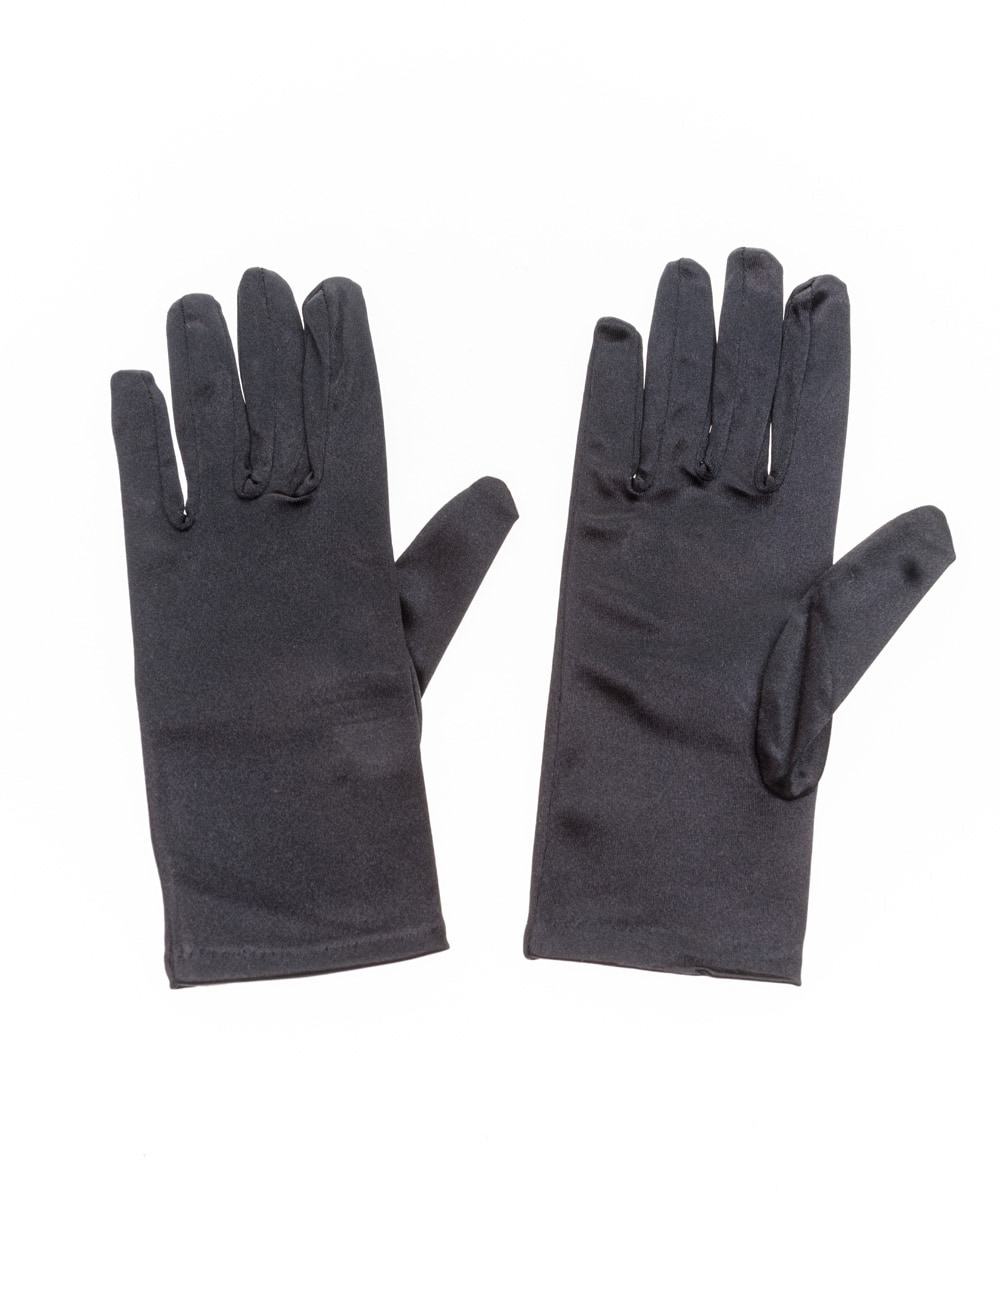 Handschuhe kurz Satin 20cm Damen schwarz one size